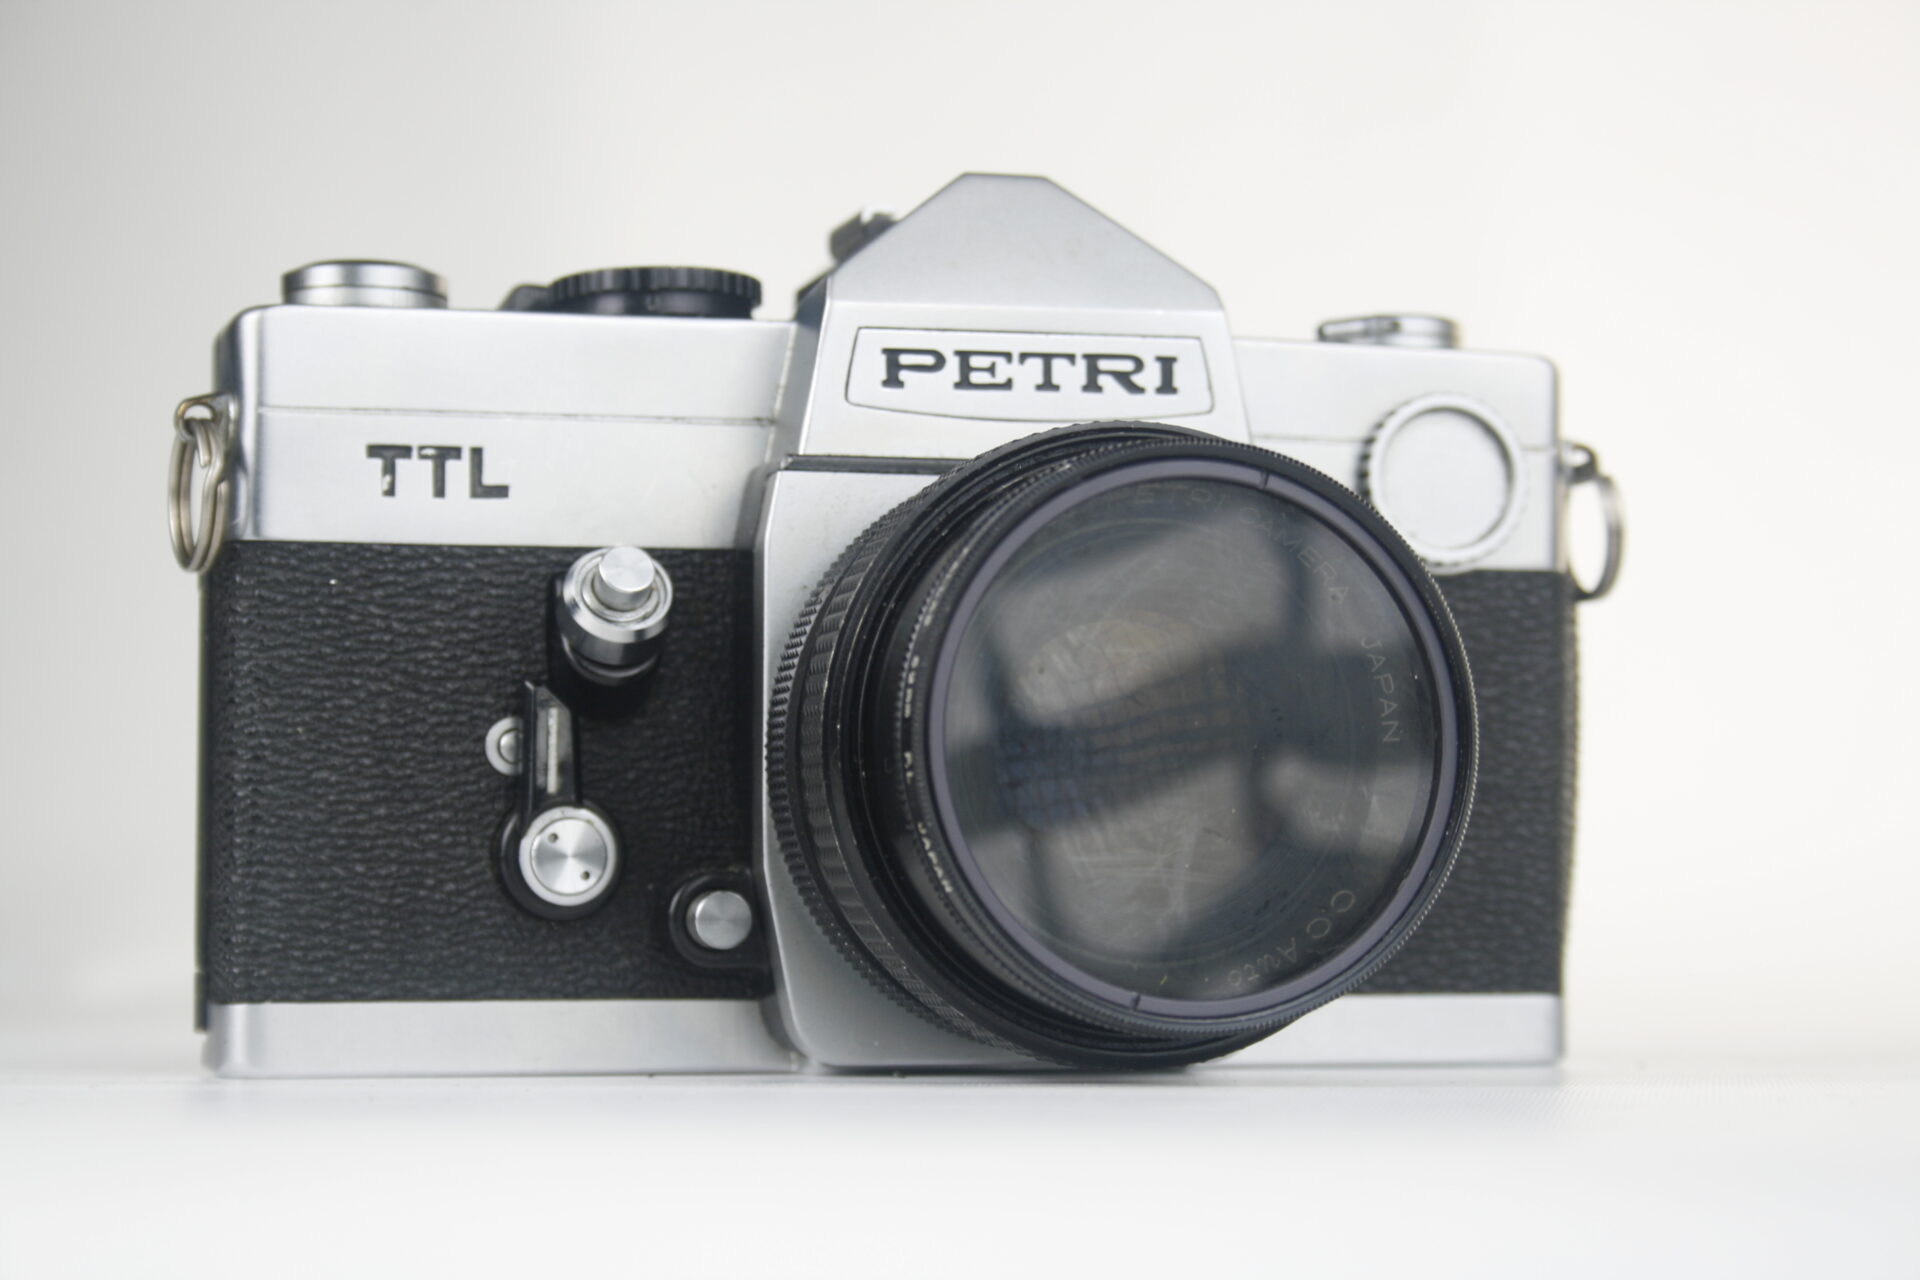 Petri TTL. 35mm SLR camera. Ca. 1974. Japan.